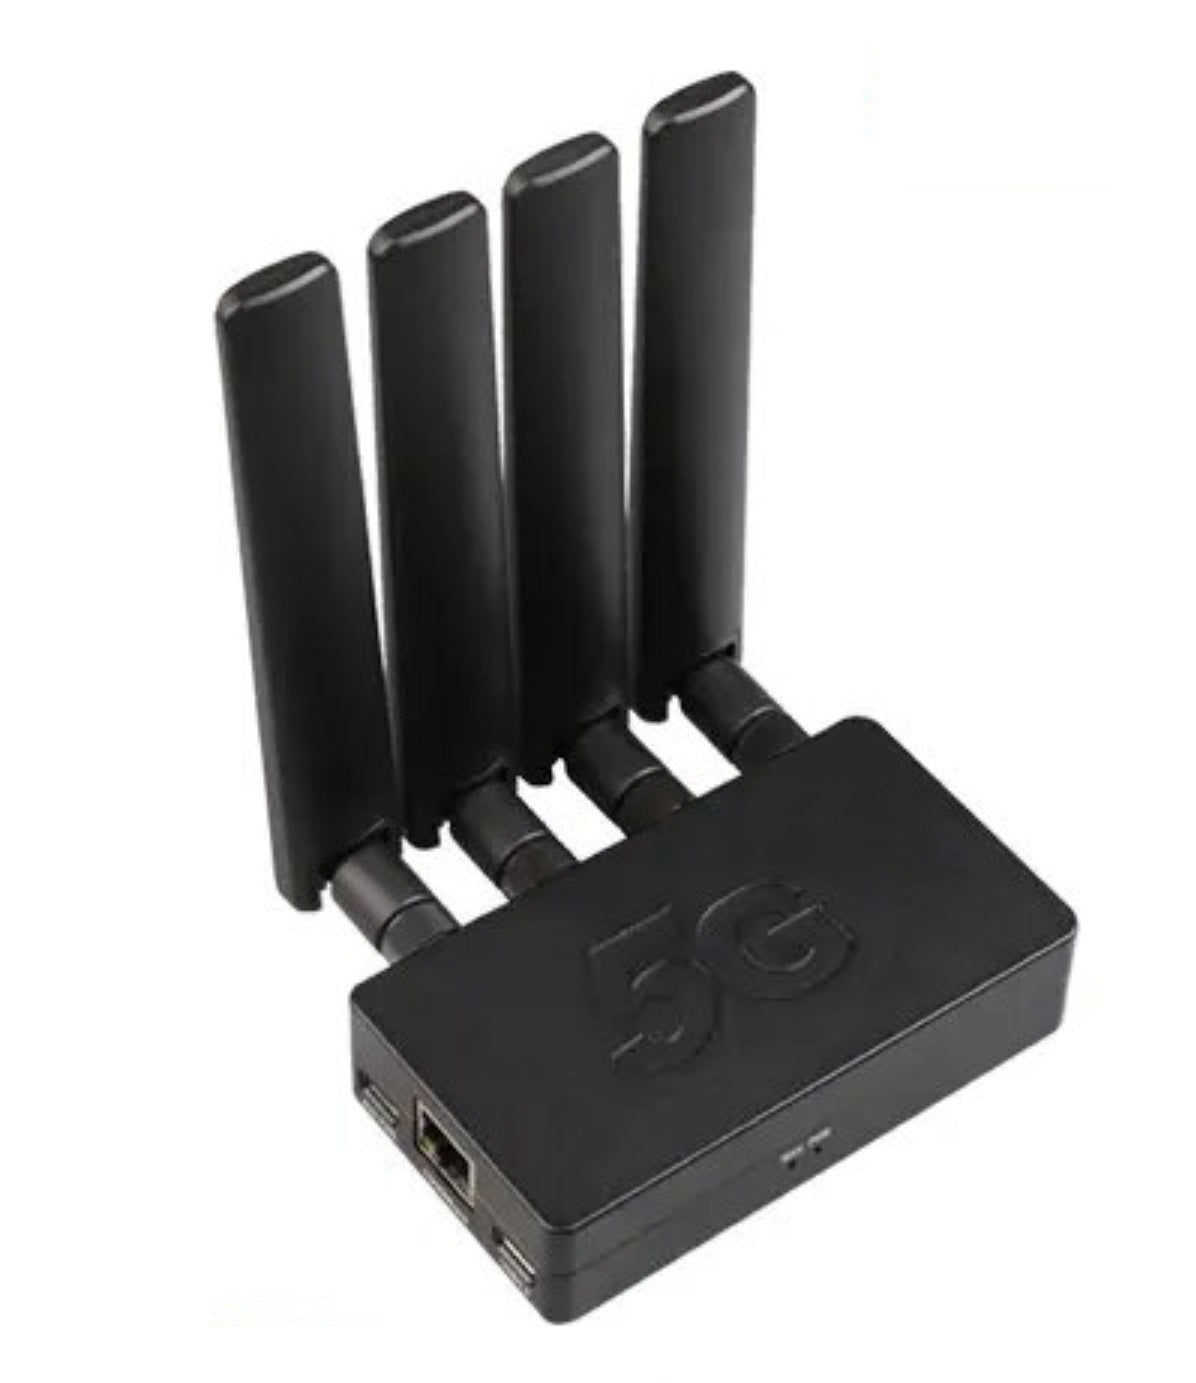 5G Ninja v2    - Quectel Dual Sim M.2 to RJ45 Wi-Fi Less USB-C Router Less  - EVERYTHING IS MANUAL